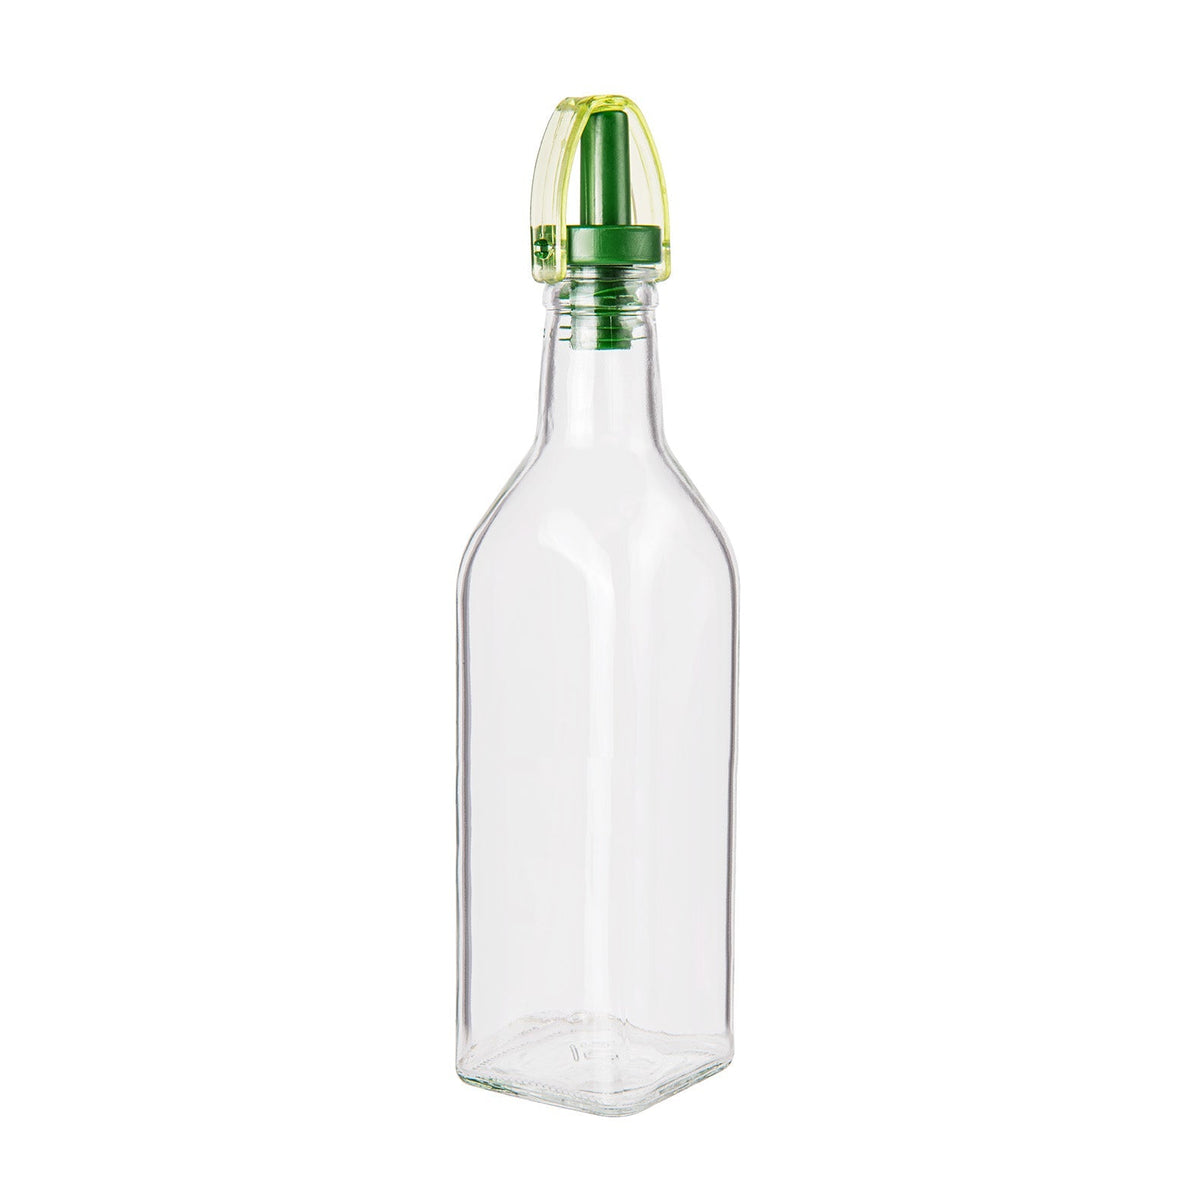 Stiklo butelis su aliejumi arba acto dozatoriumi - 250 ml